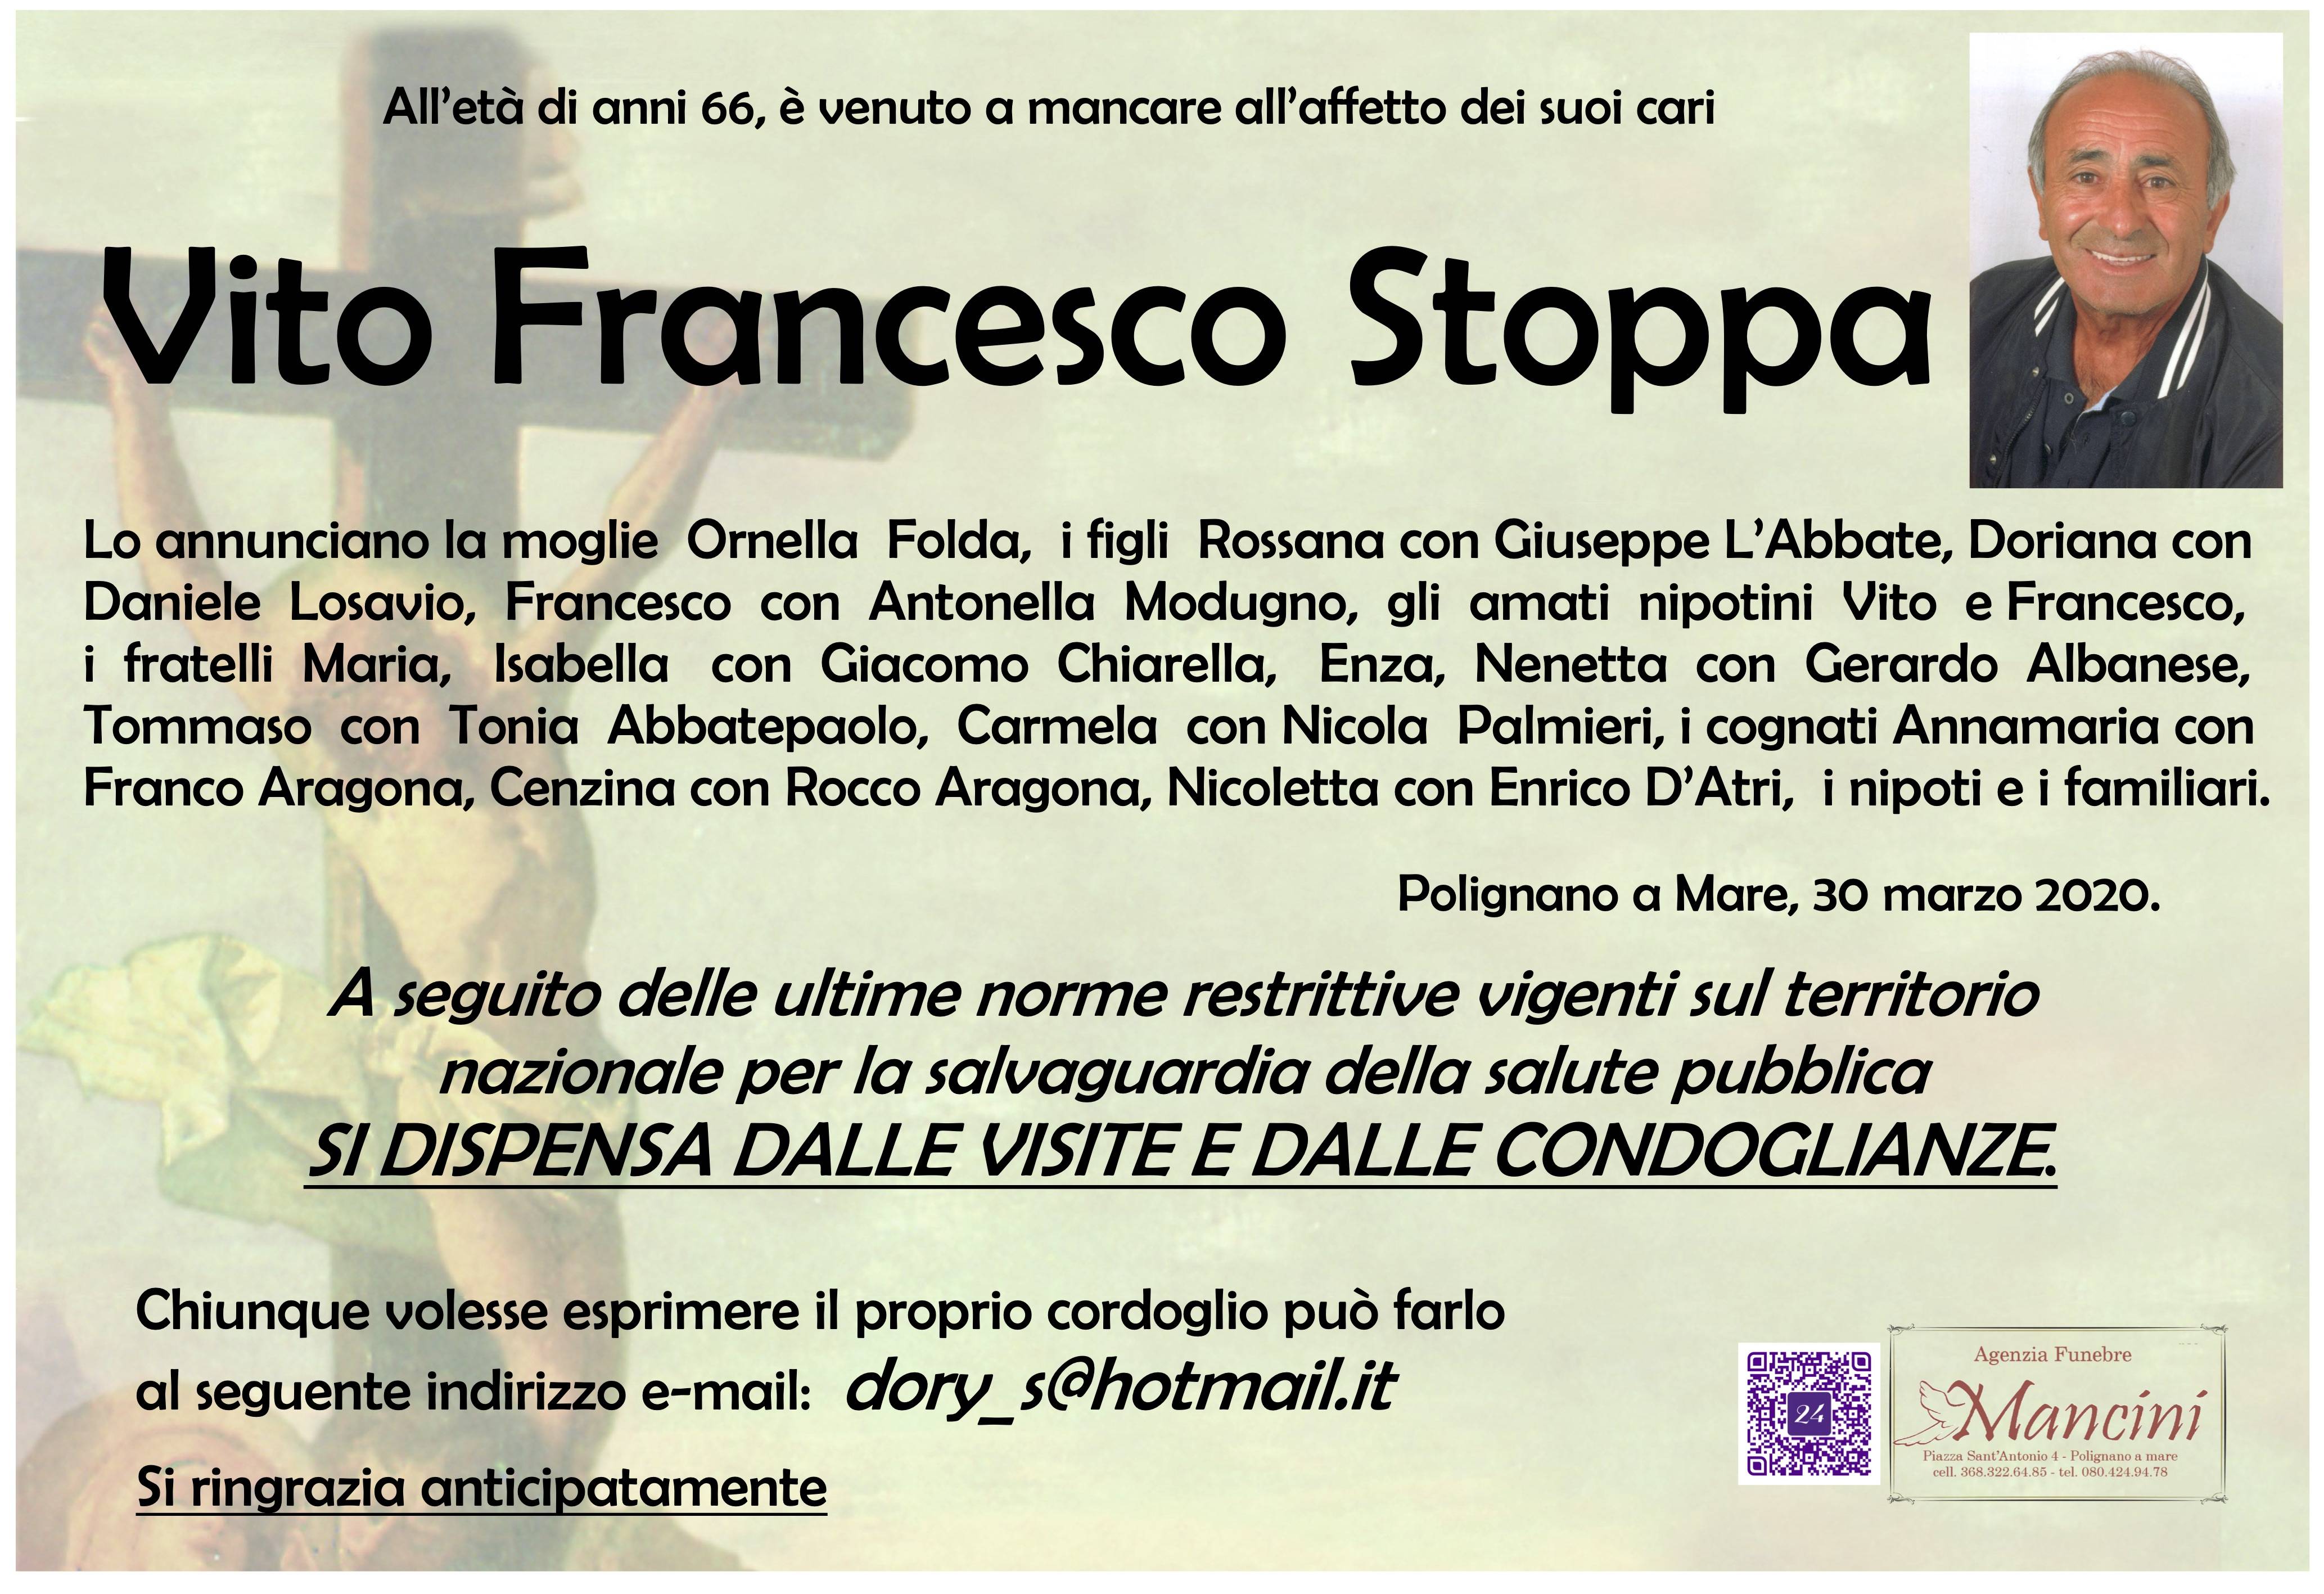 Vito Francesco Stoppa